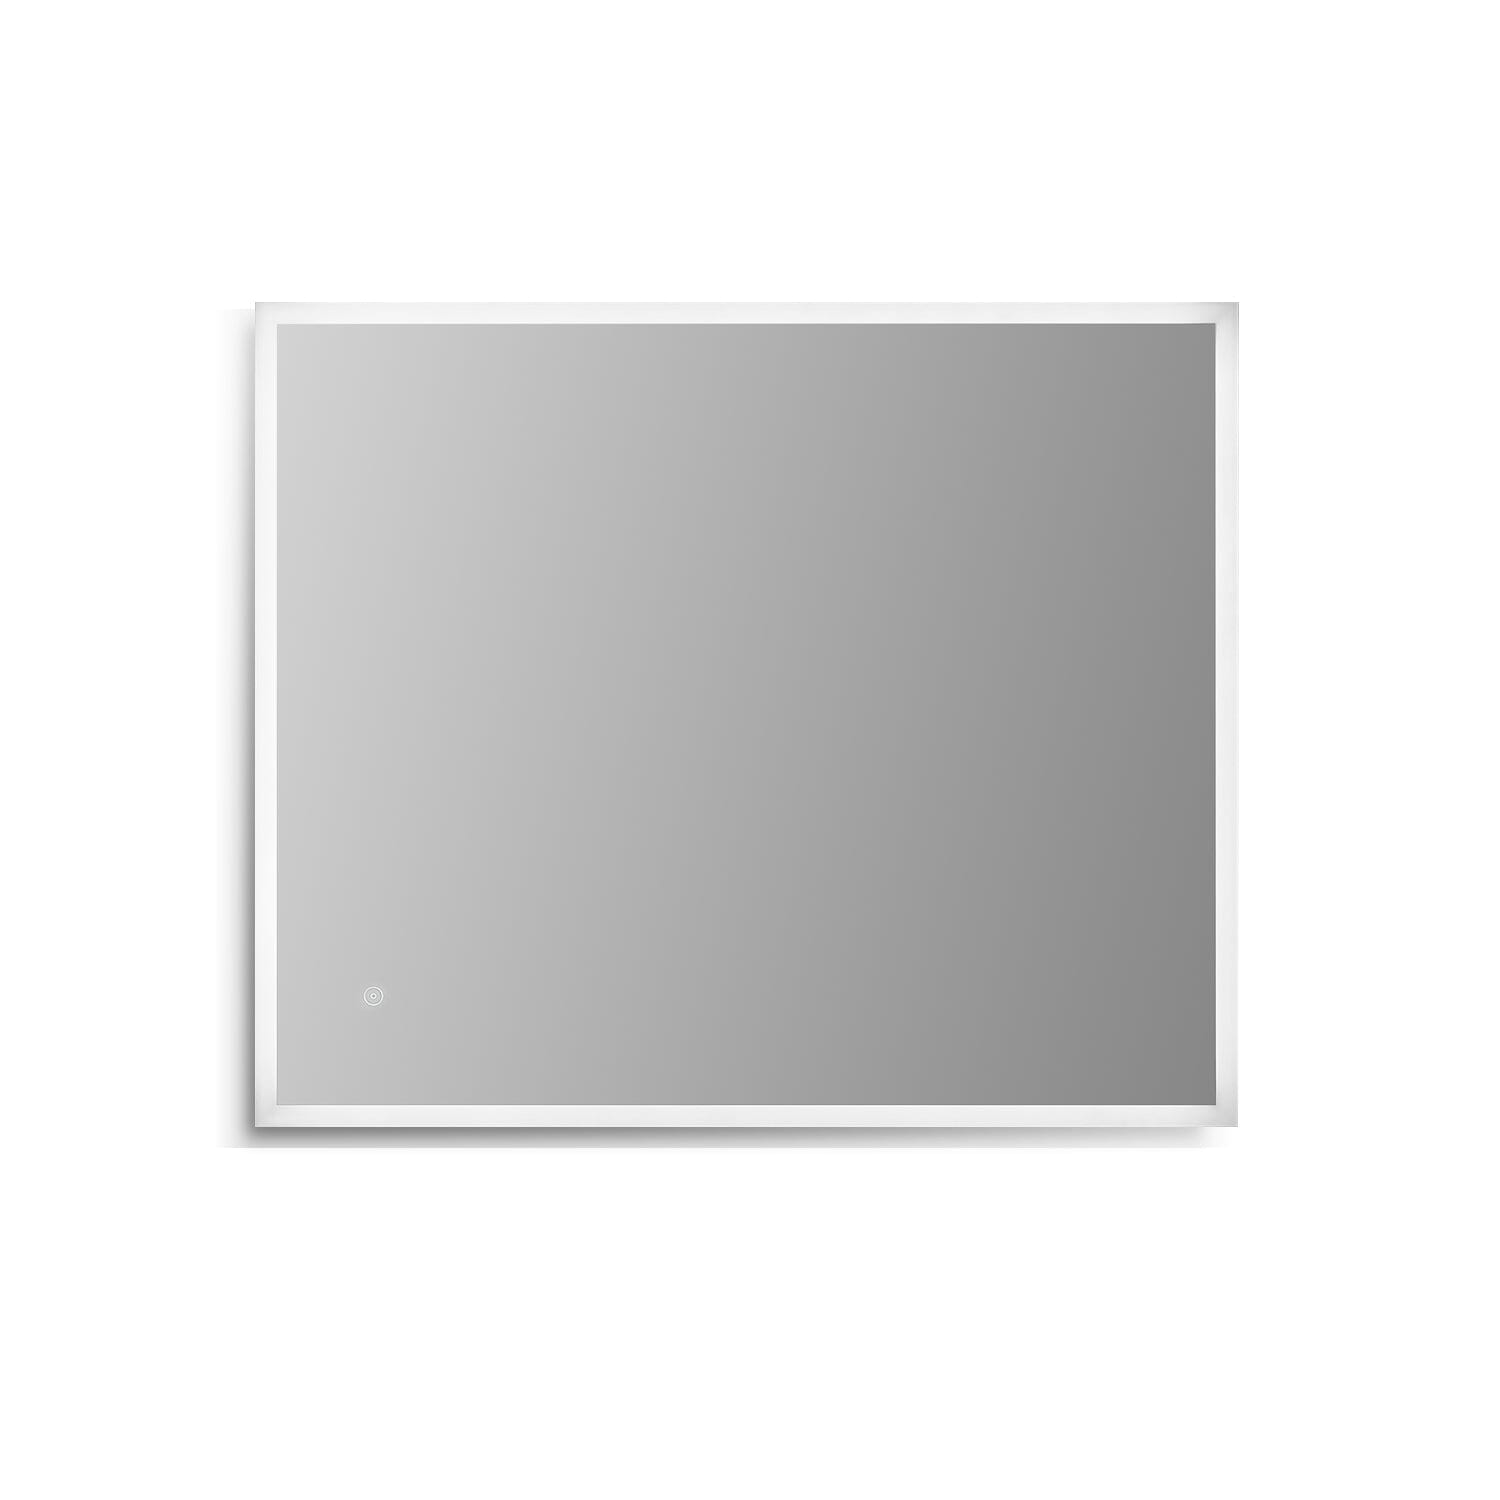 Altair - Cassano LED Bathroom Mirror 36W x 30H - 747036-LED-NF